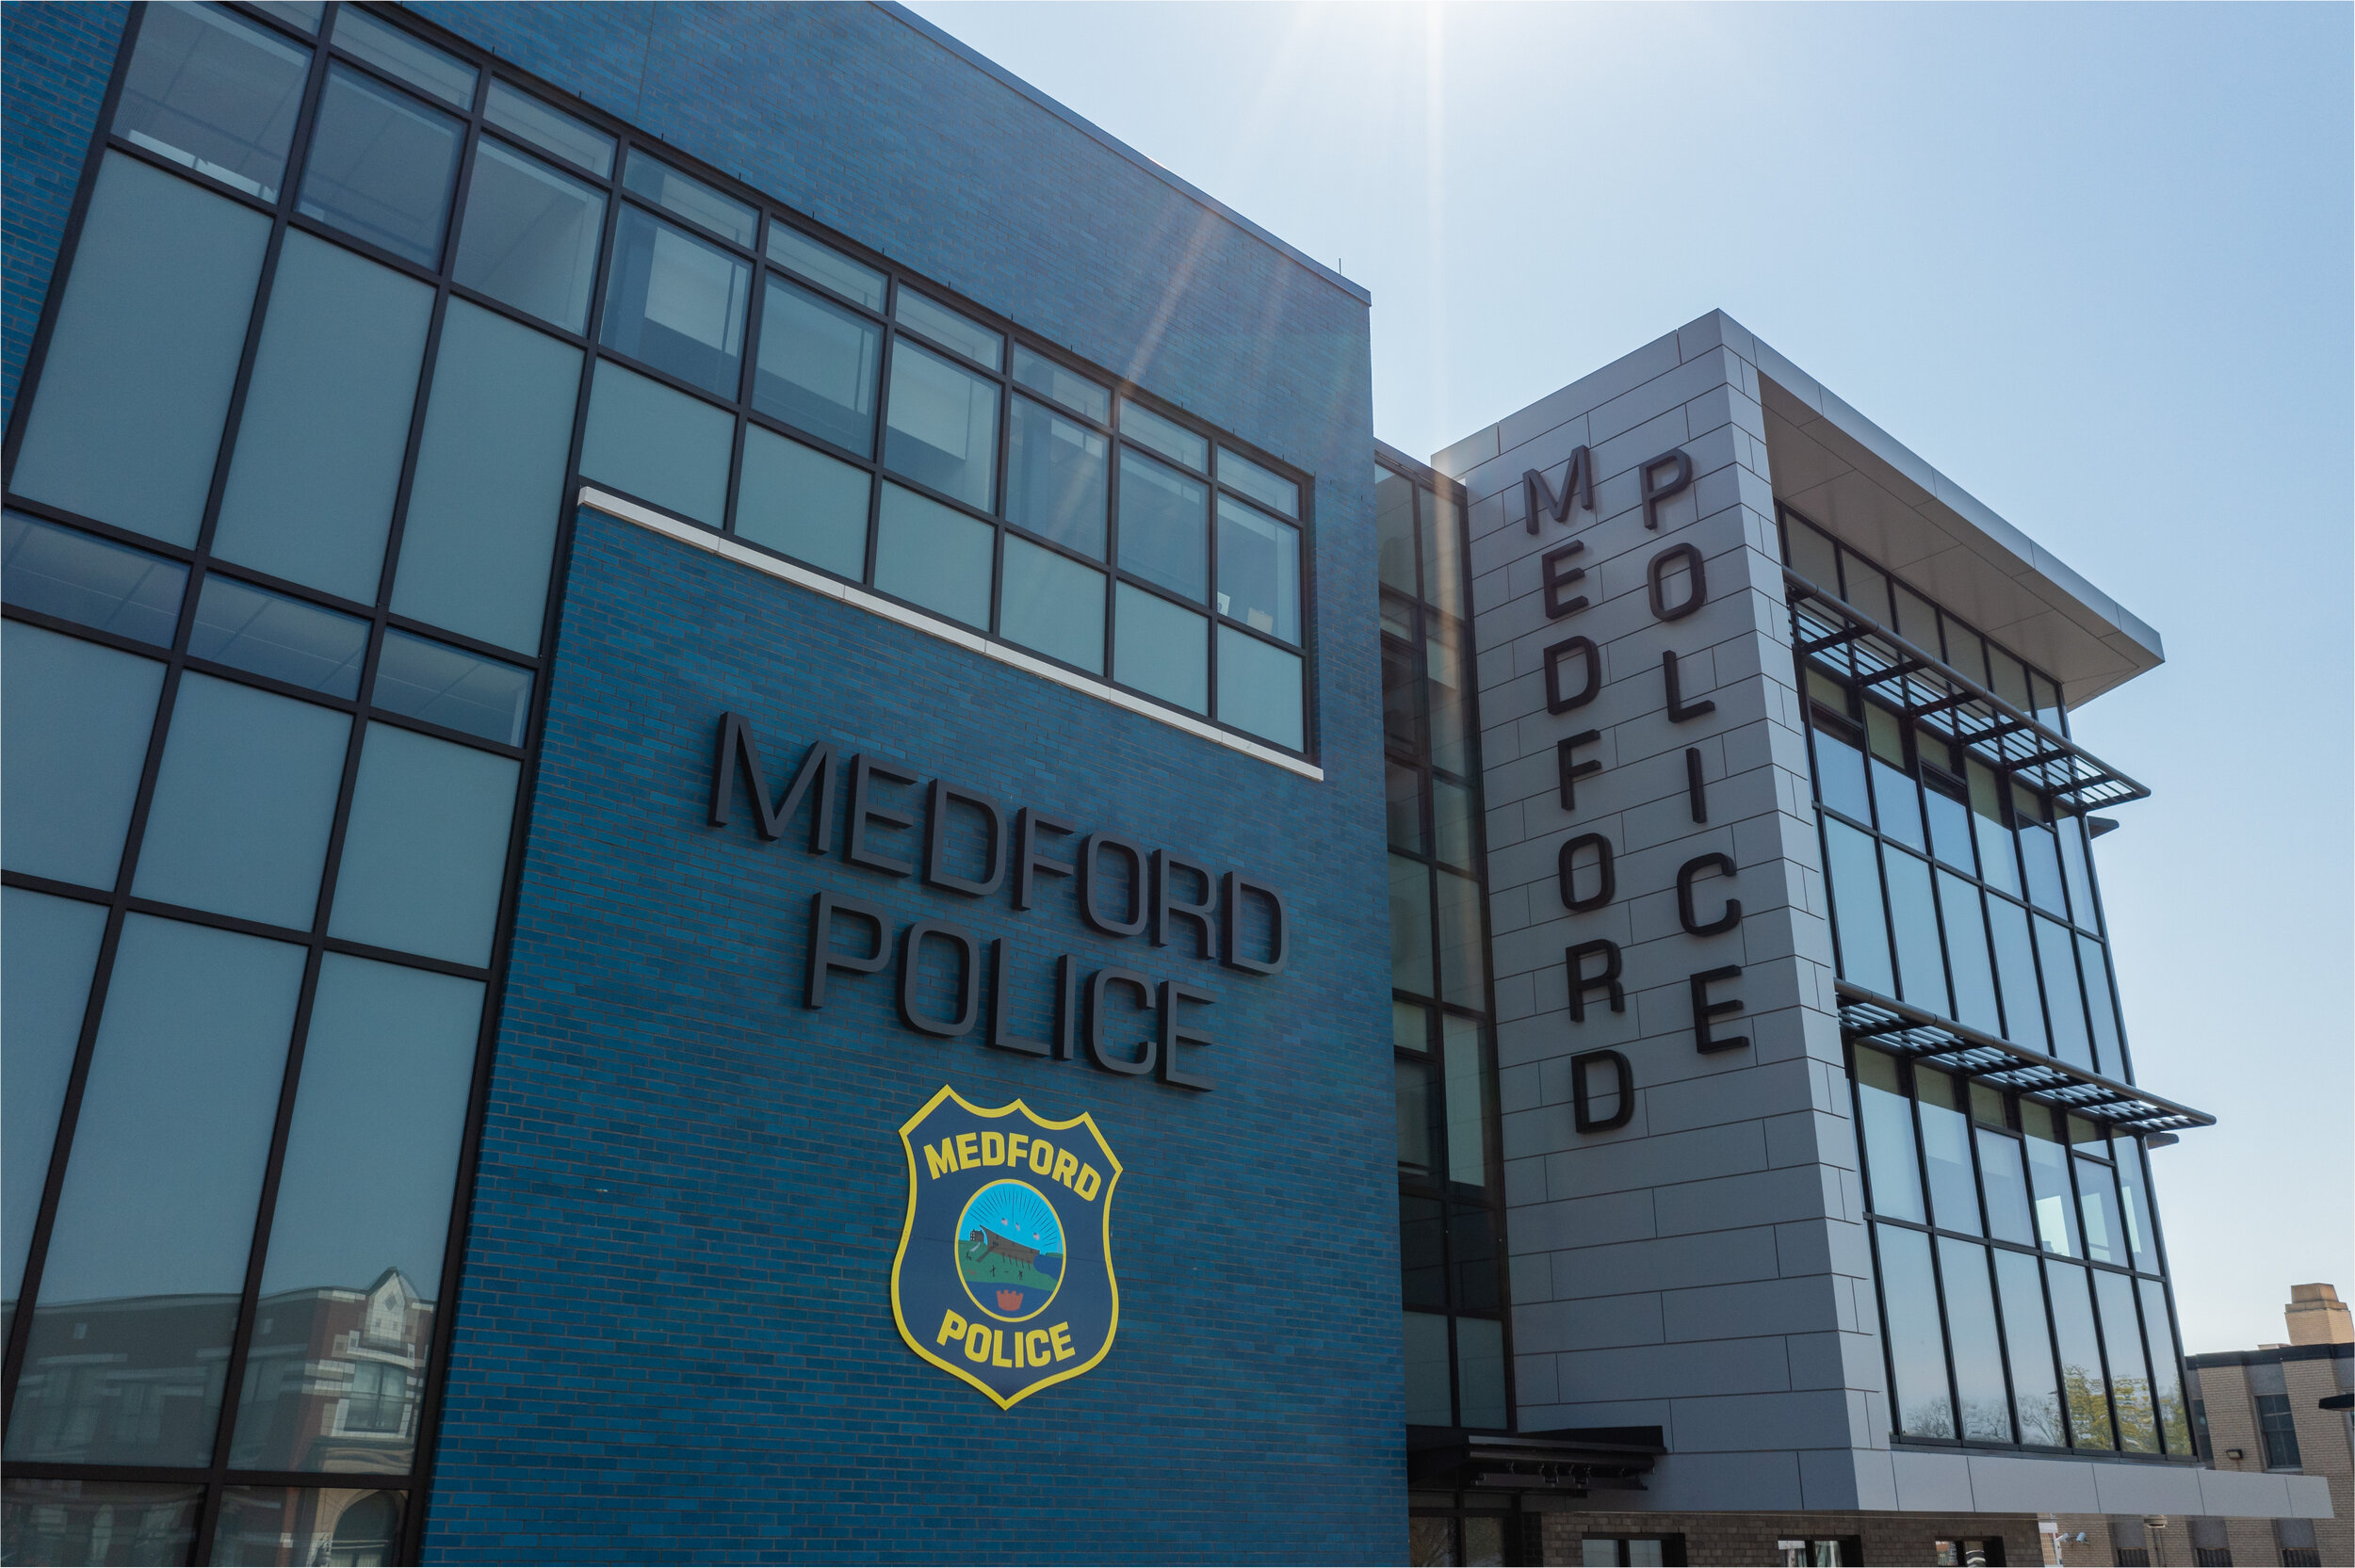 Bass-Medford Police Headquarters-5.jpg